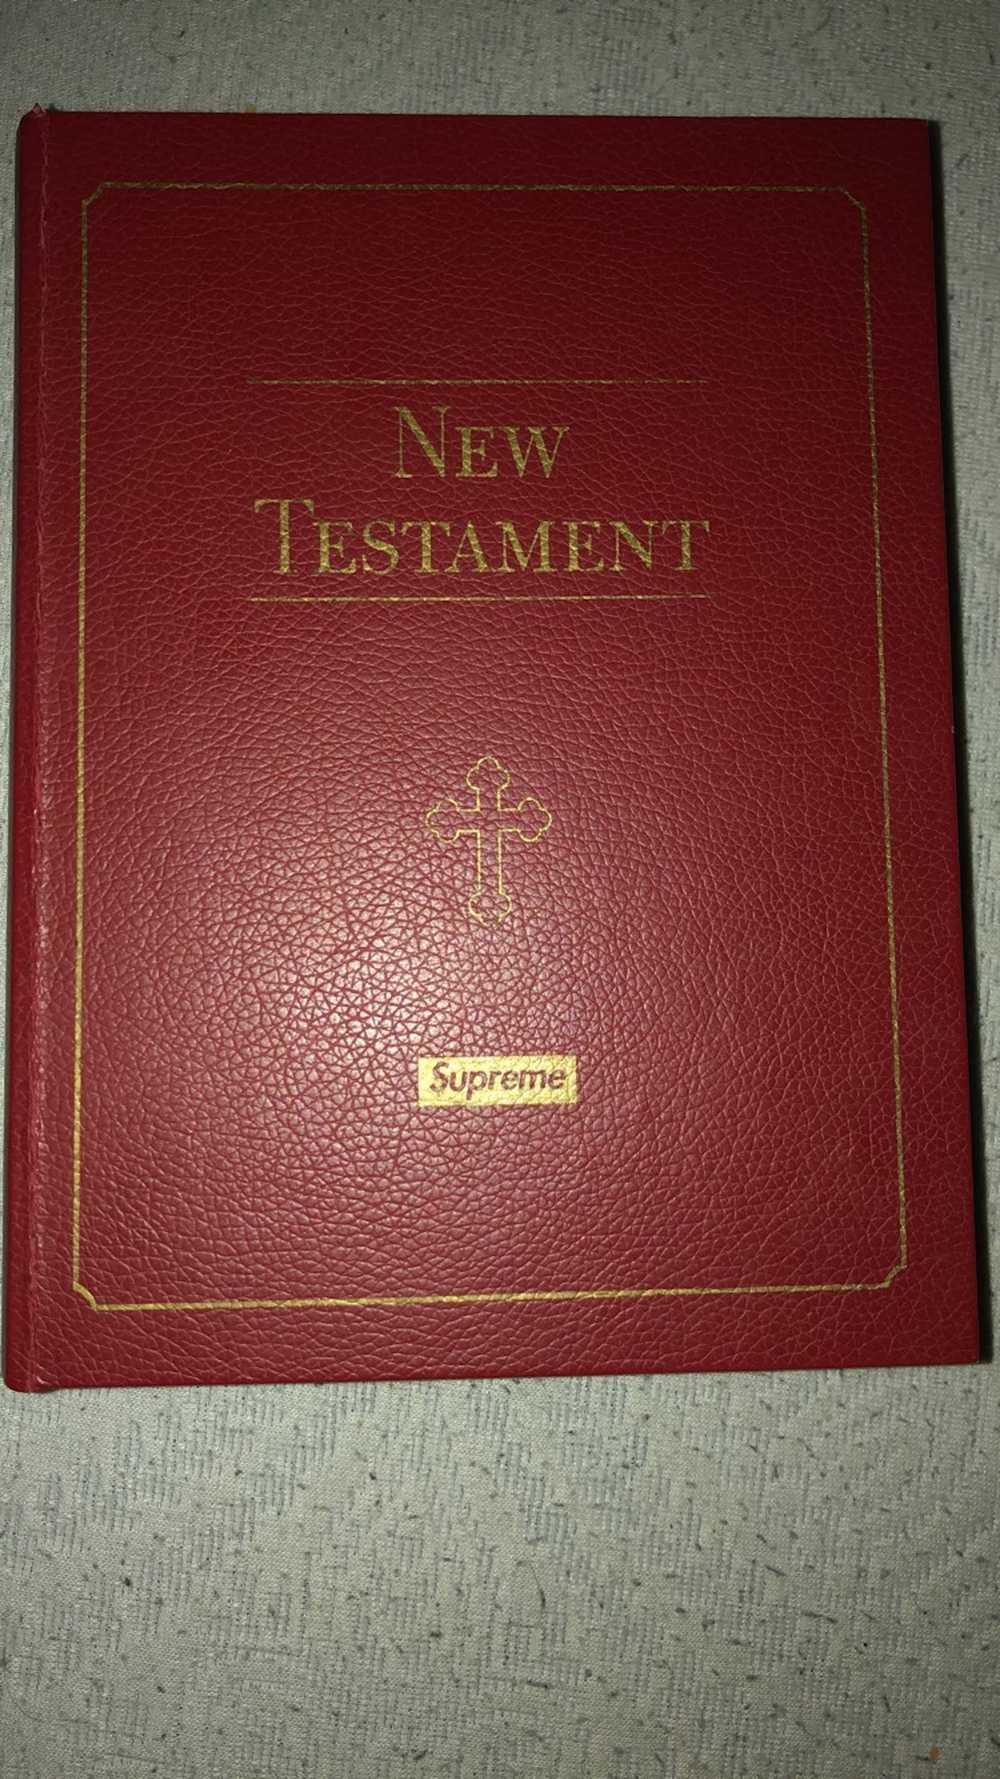 Supreme Supreme Stash Bible “New Testament” - image 1